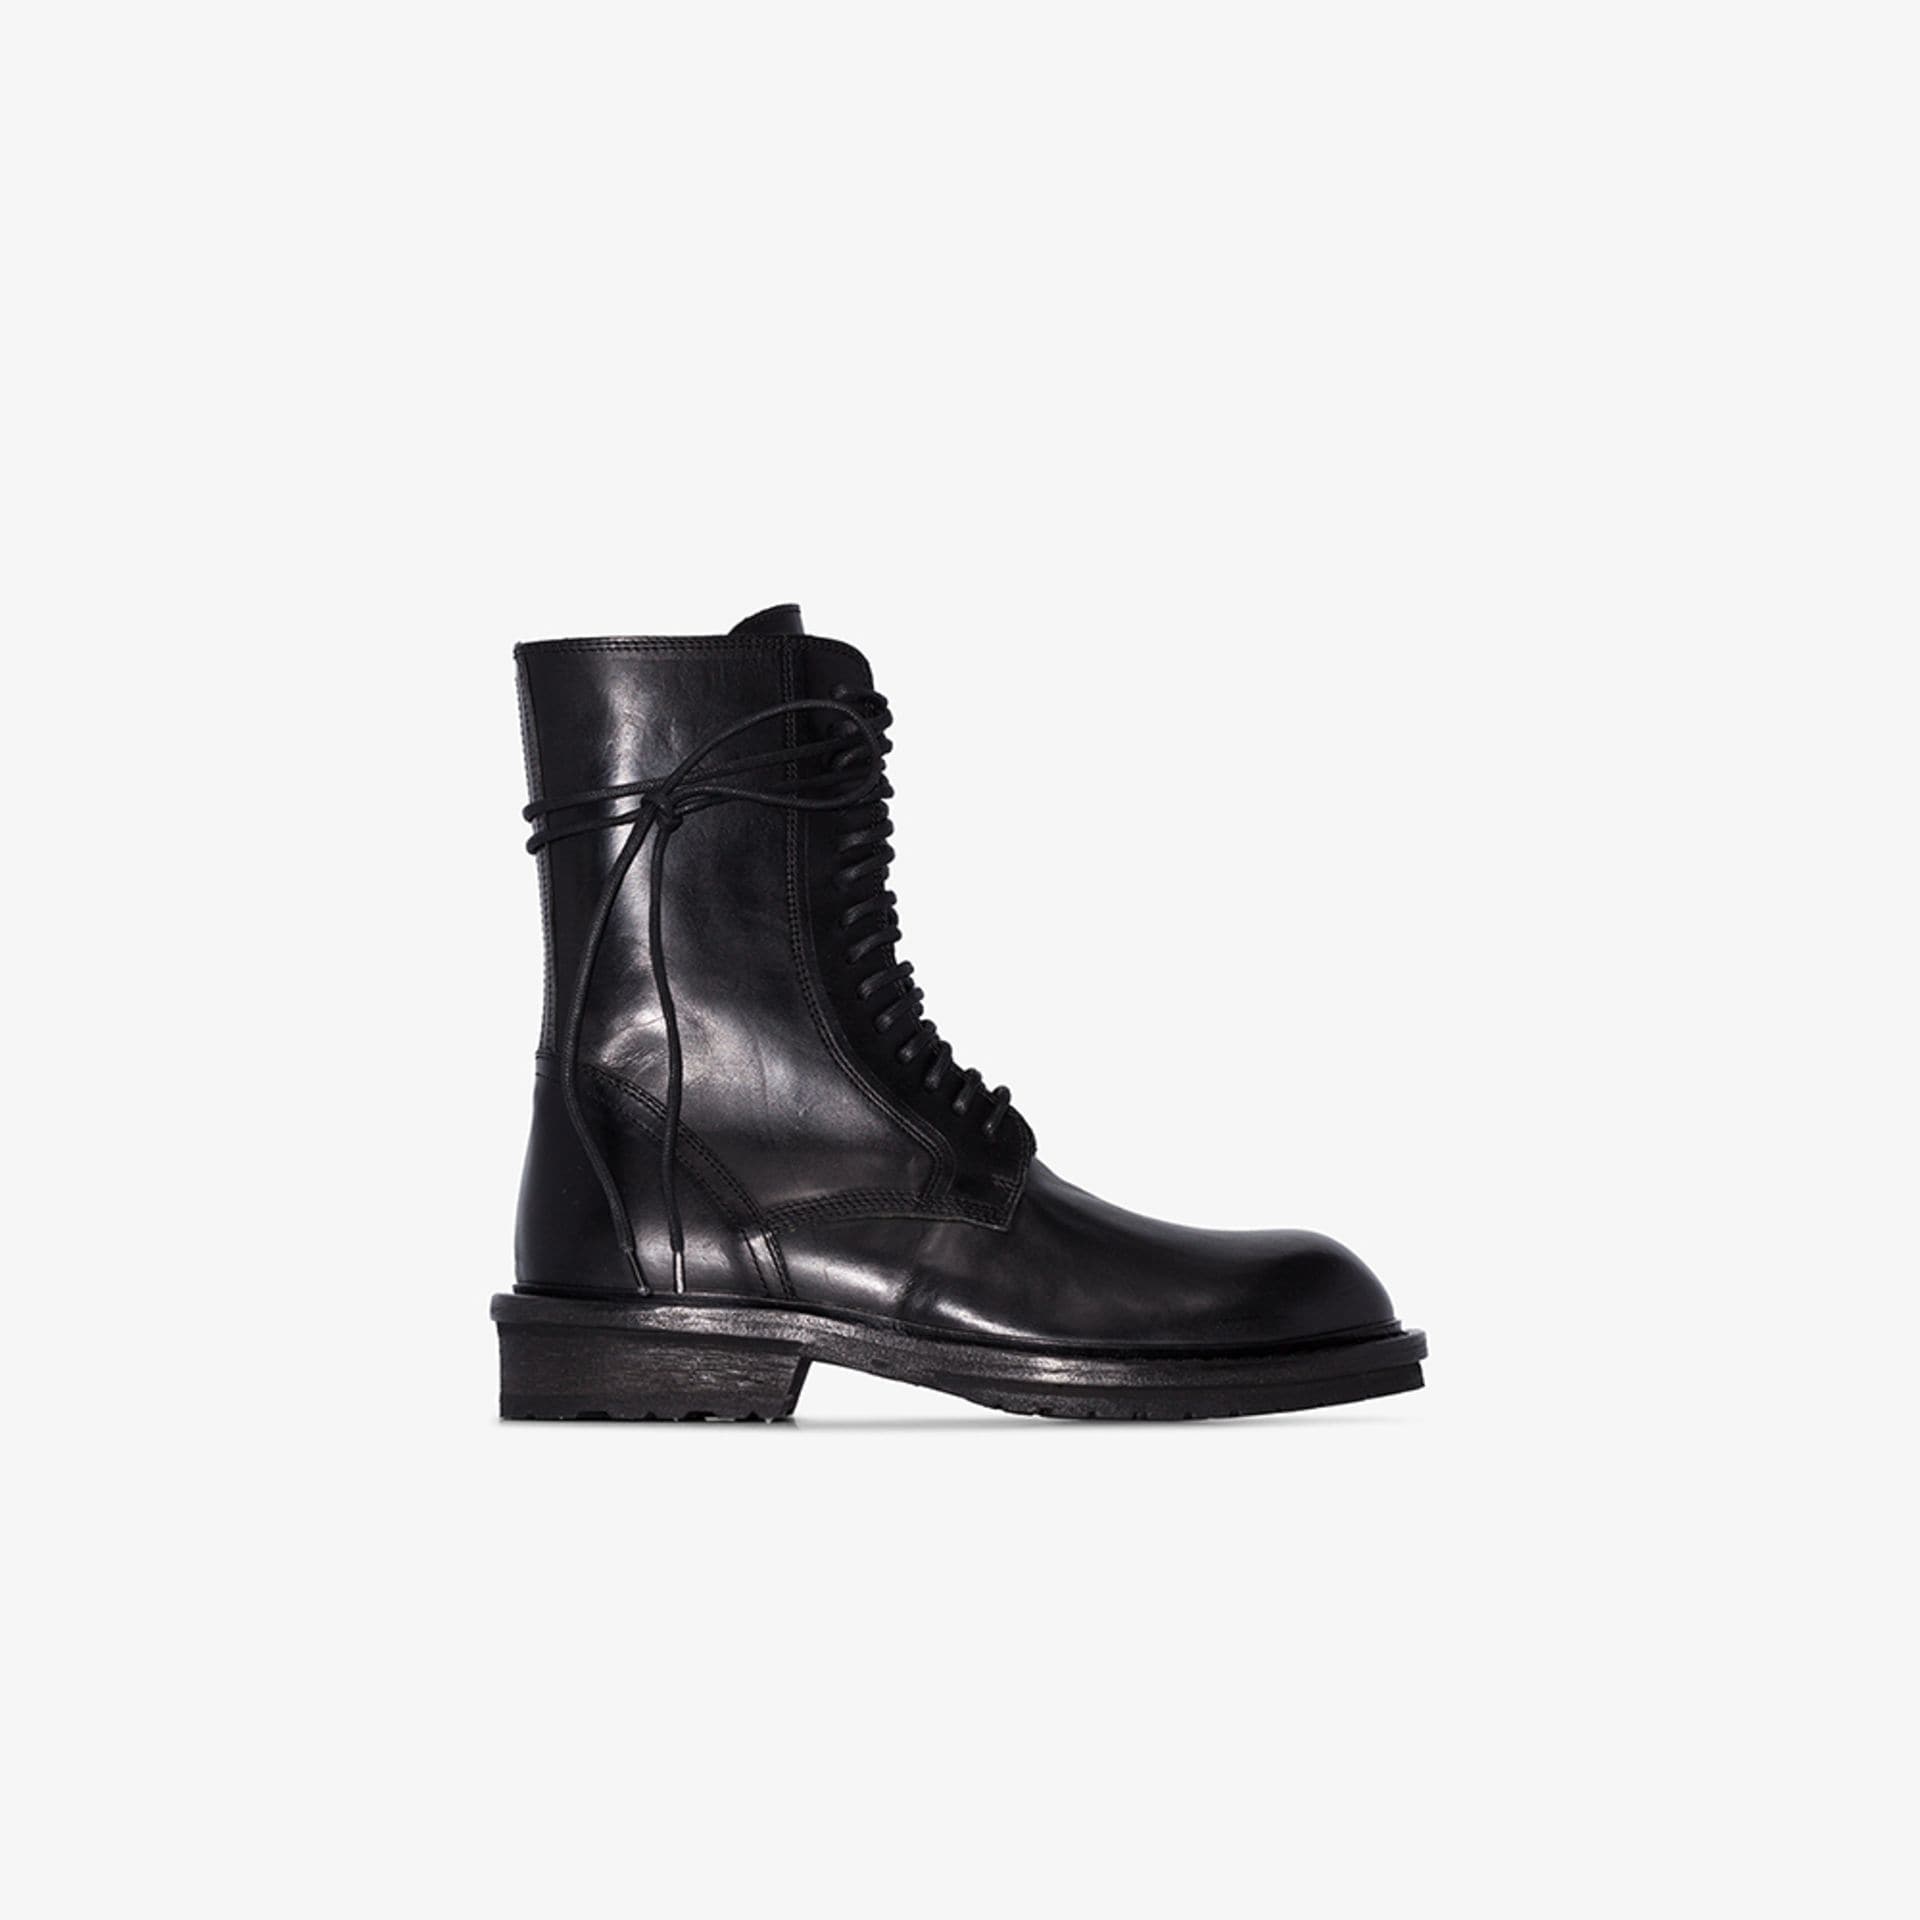 black leather combat boots